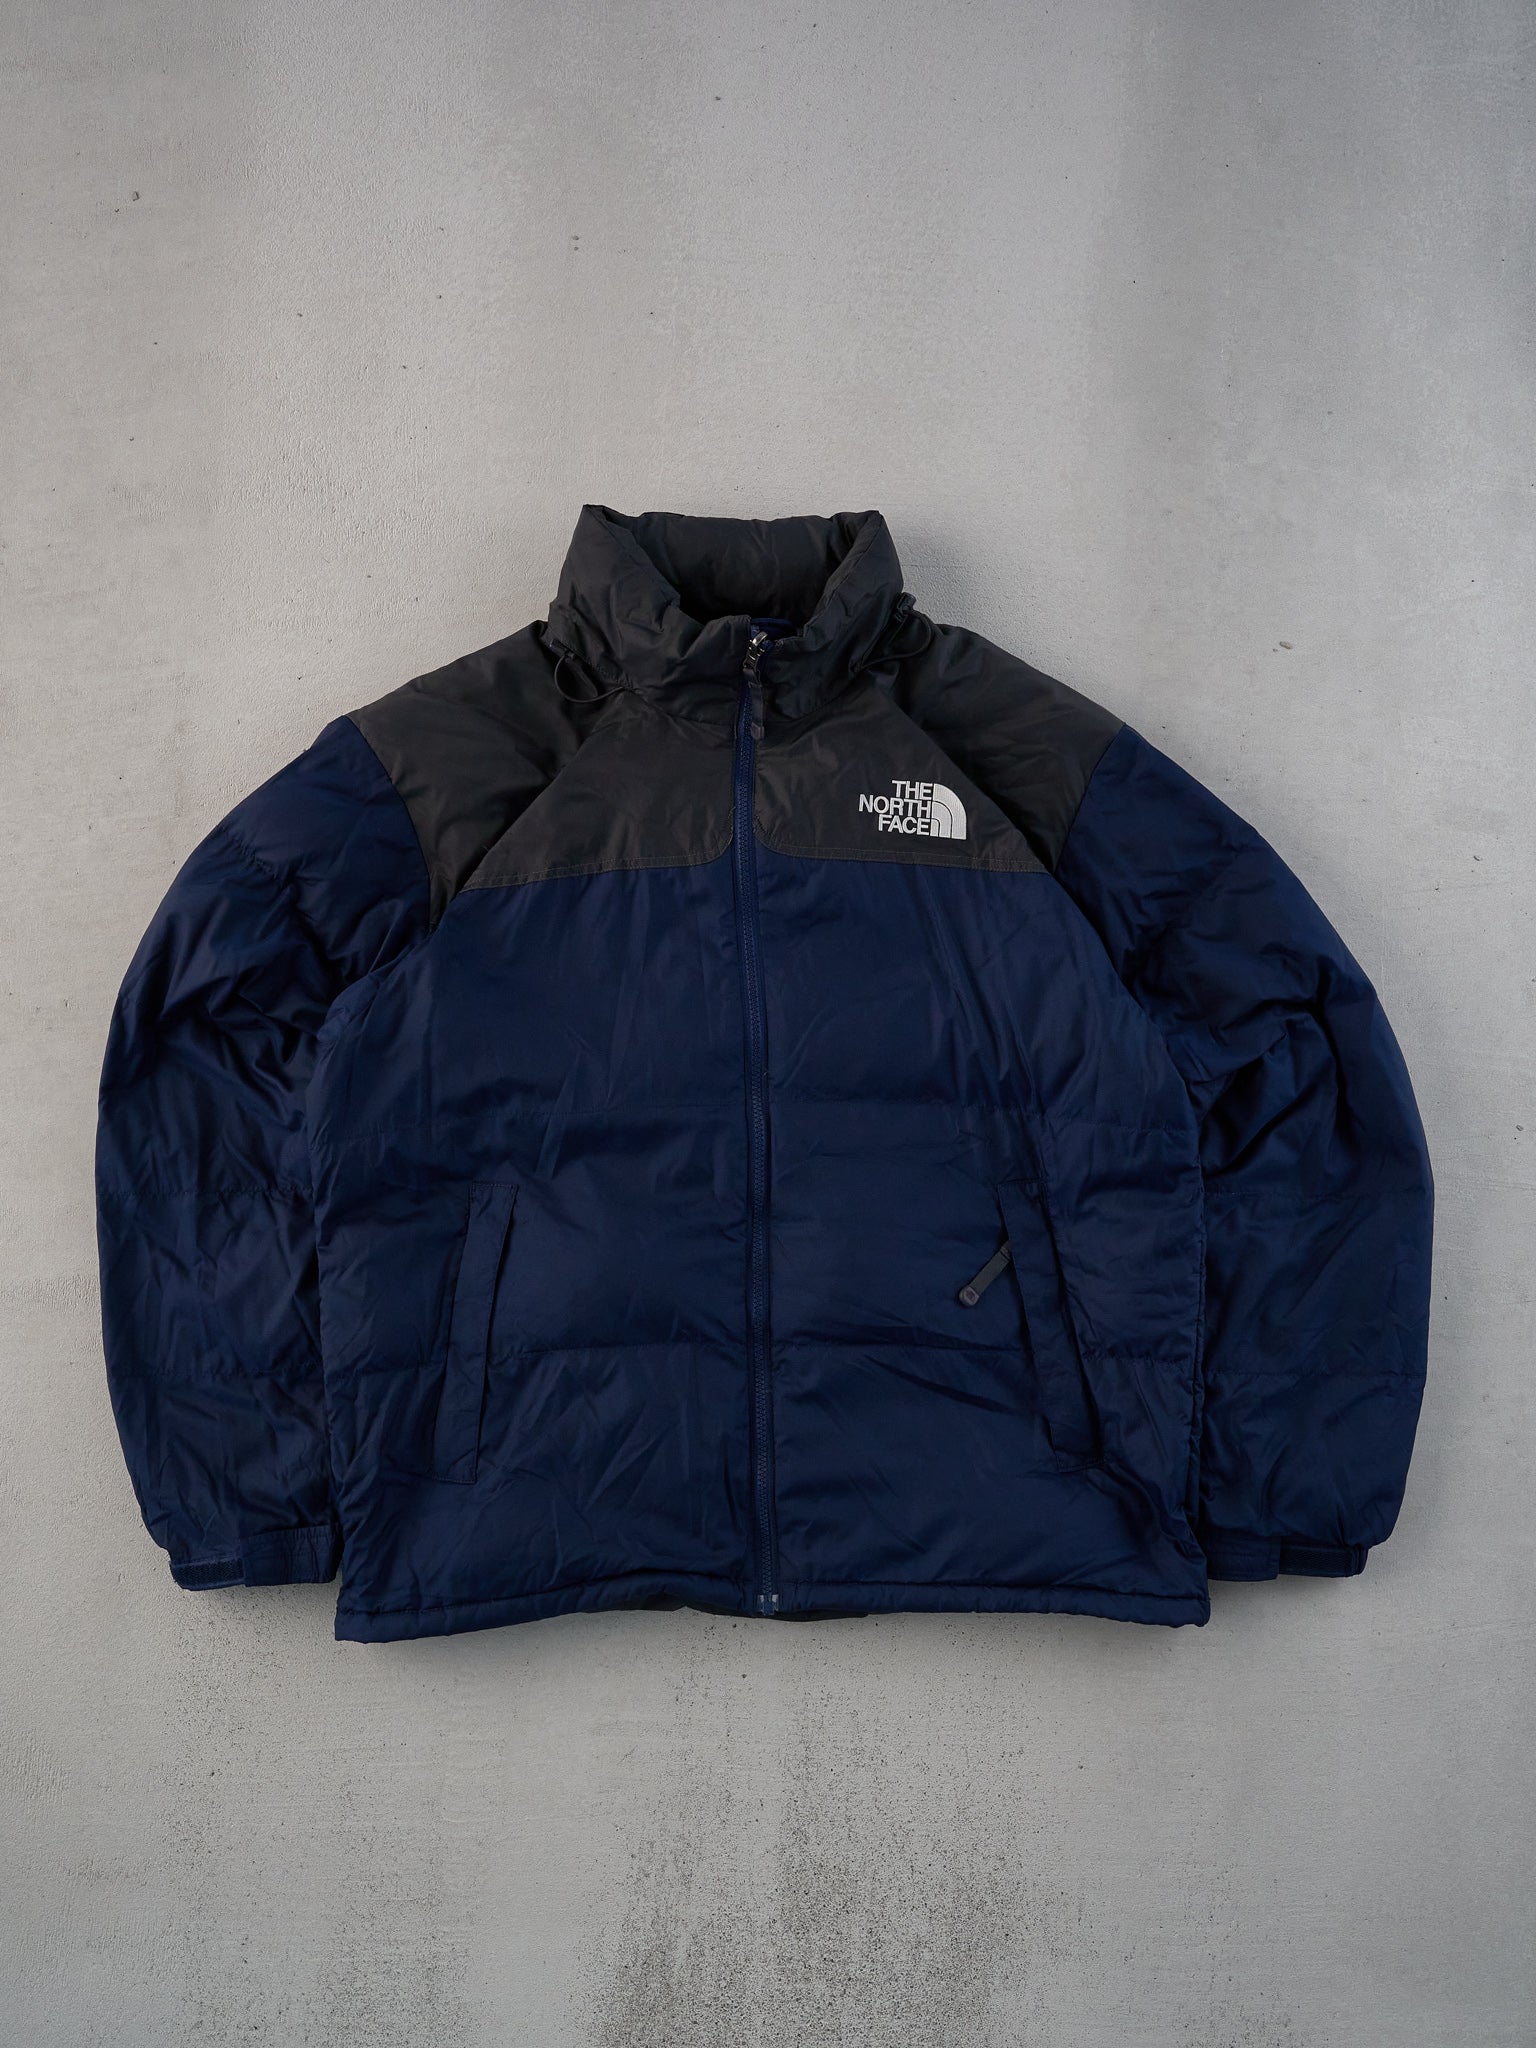 Vintage 90s Navy Blue and Black Northface Nuptse Winter Jacket (L ...